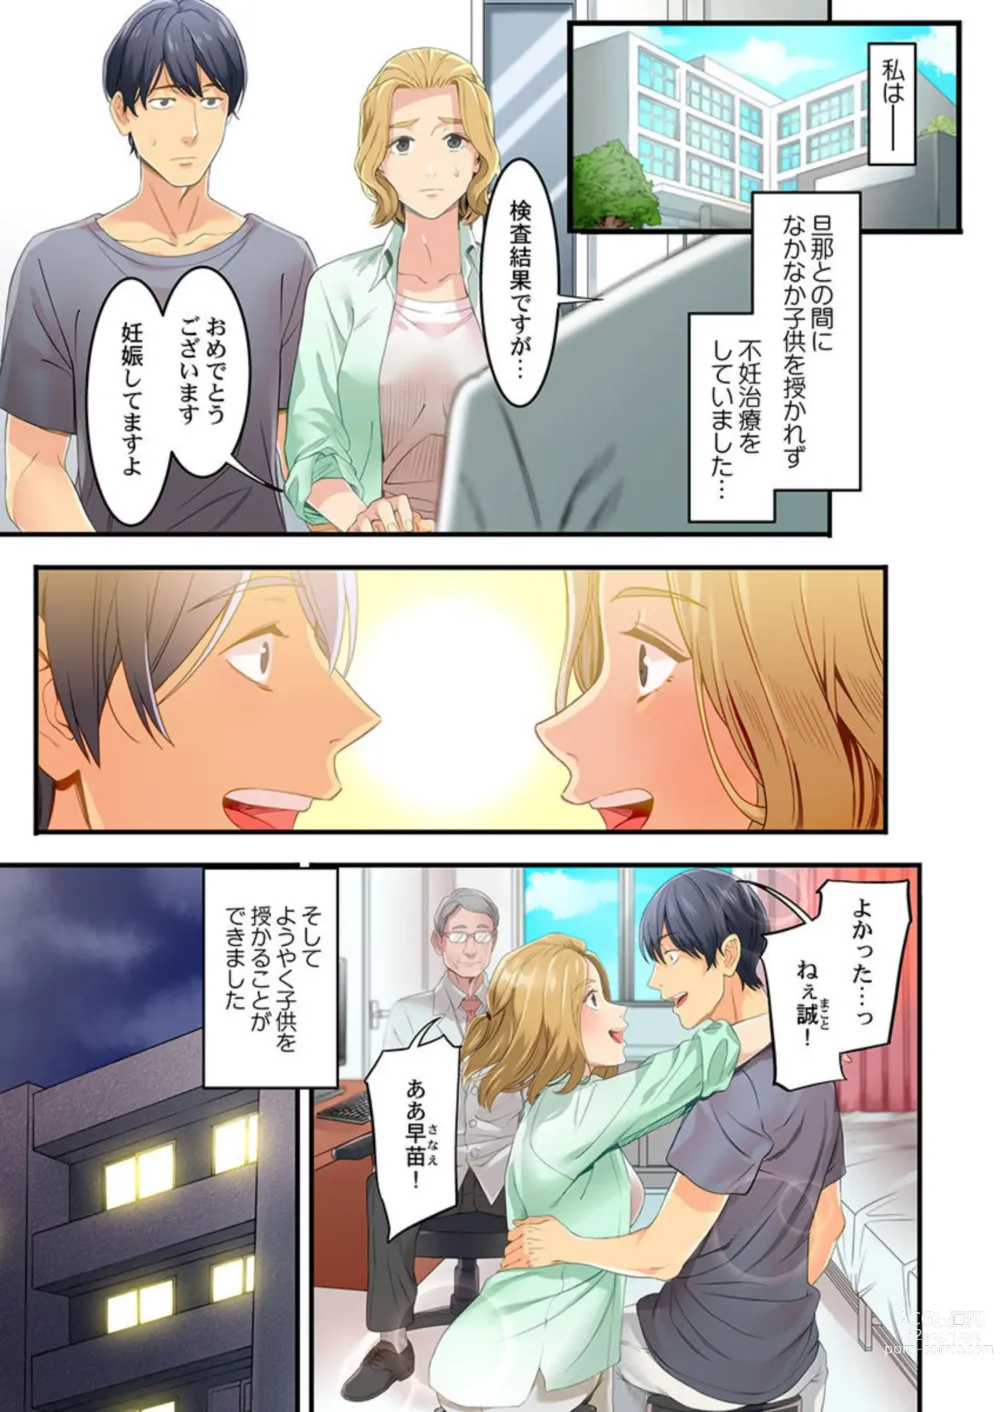 Page 5 of manga Furin Higaisha no kai